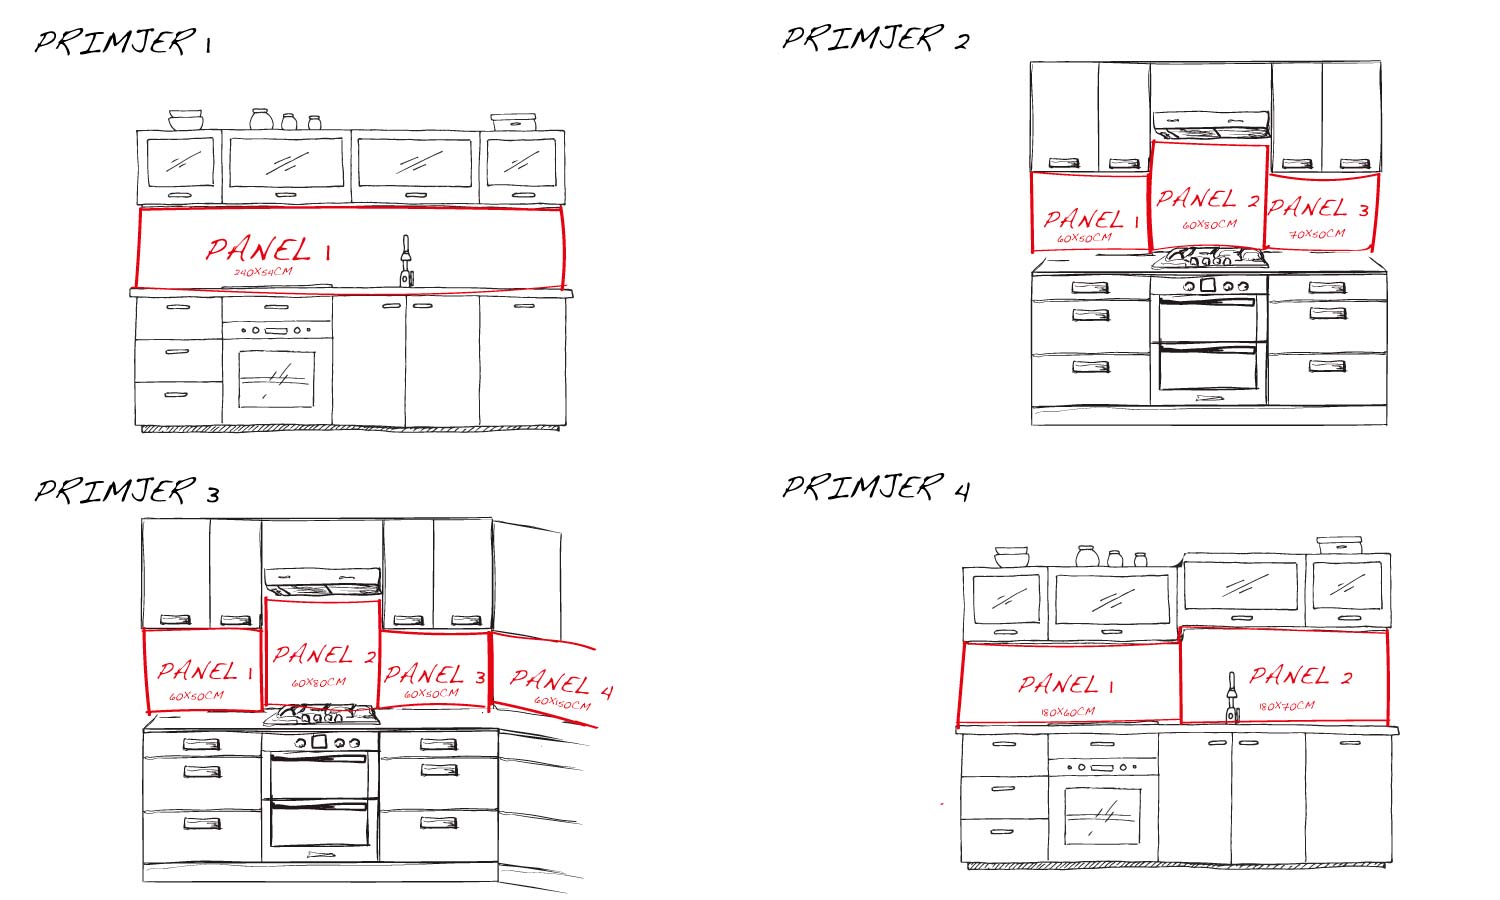 Paneli za kuhinje Paris tower -  Stakleni / PVC ploče / Pleksiglas -  sa printom za kuhinju, Zidne obloge PKU377